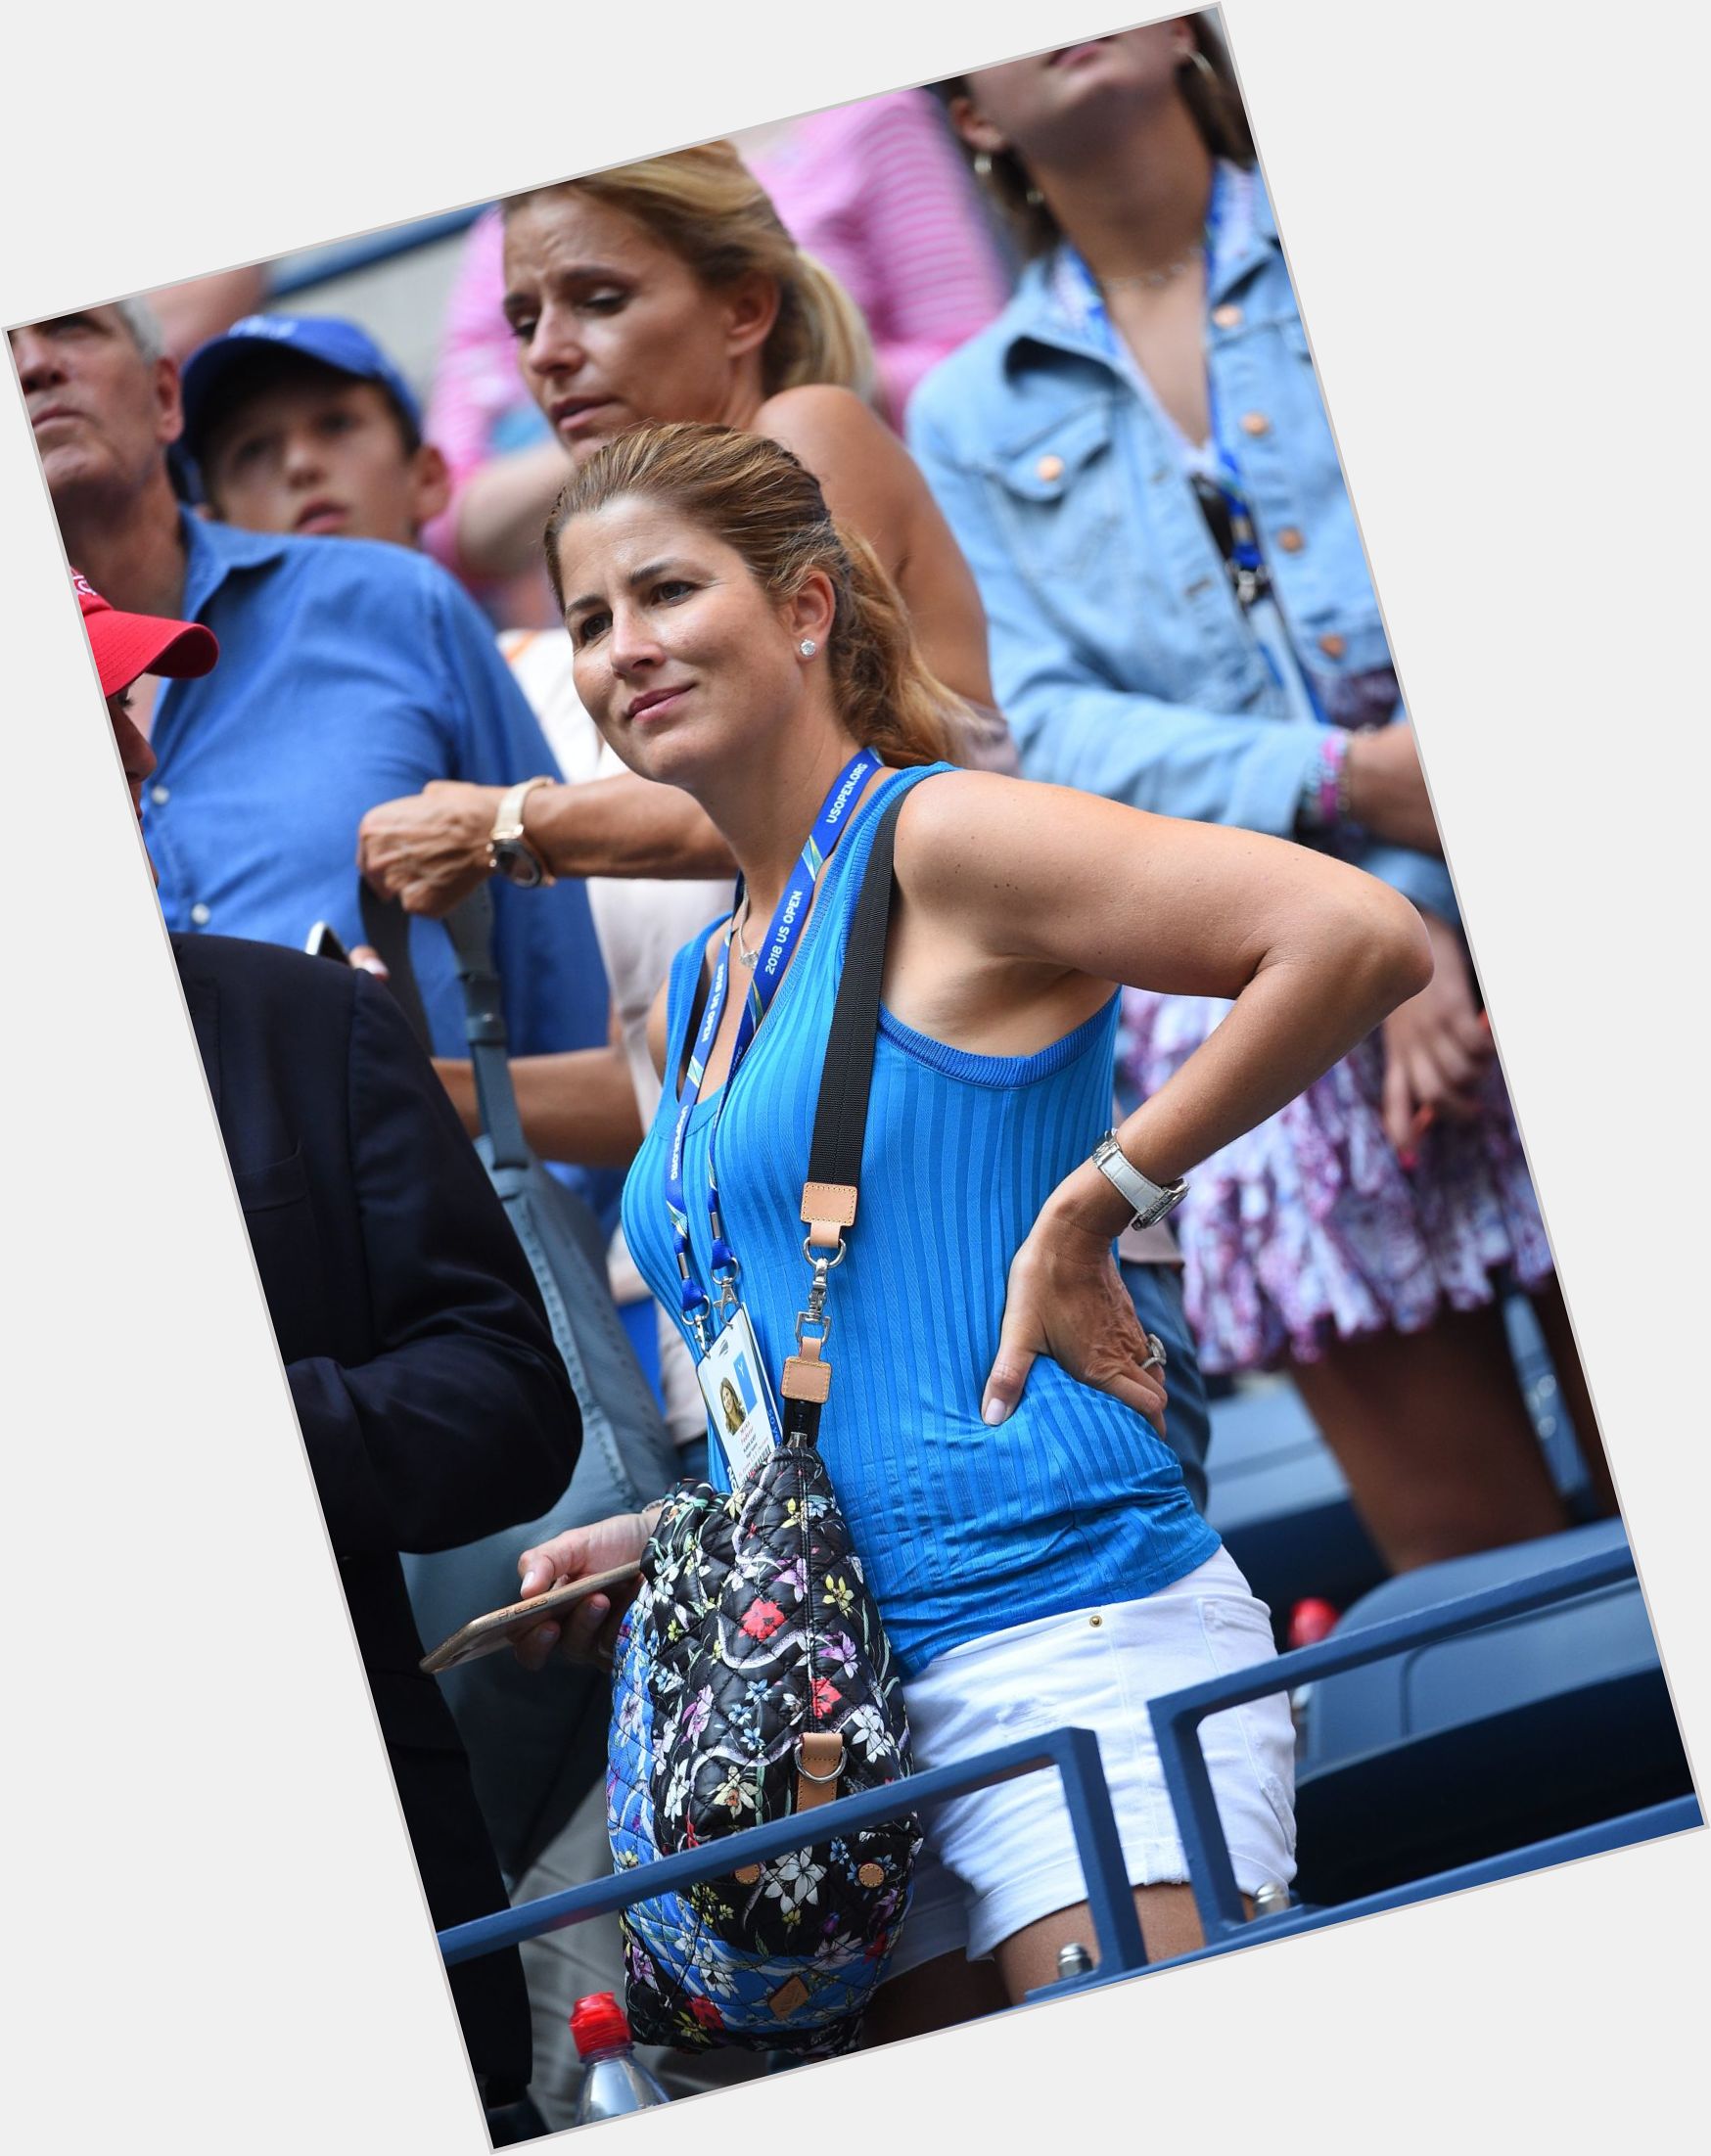 Mirka Federer exclusive hot pic 8